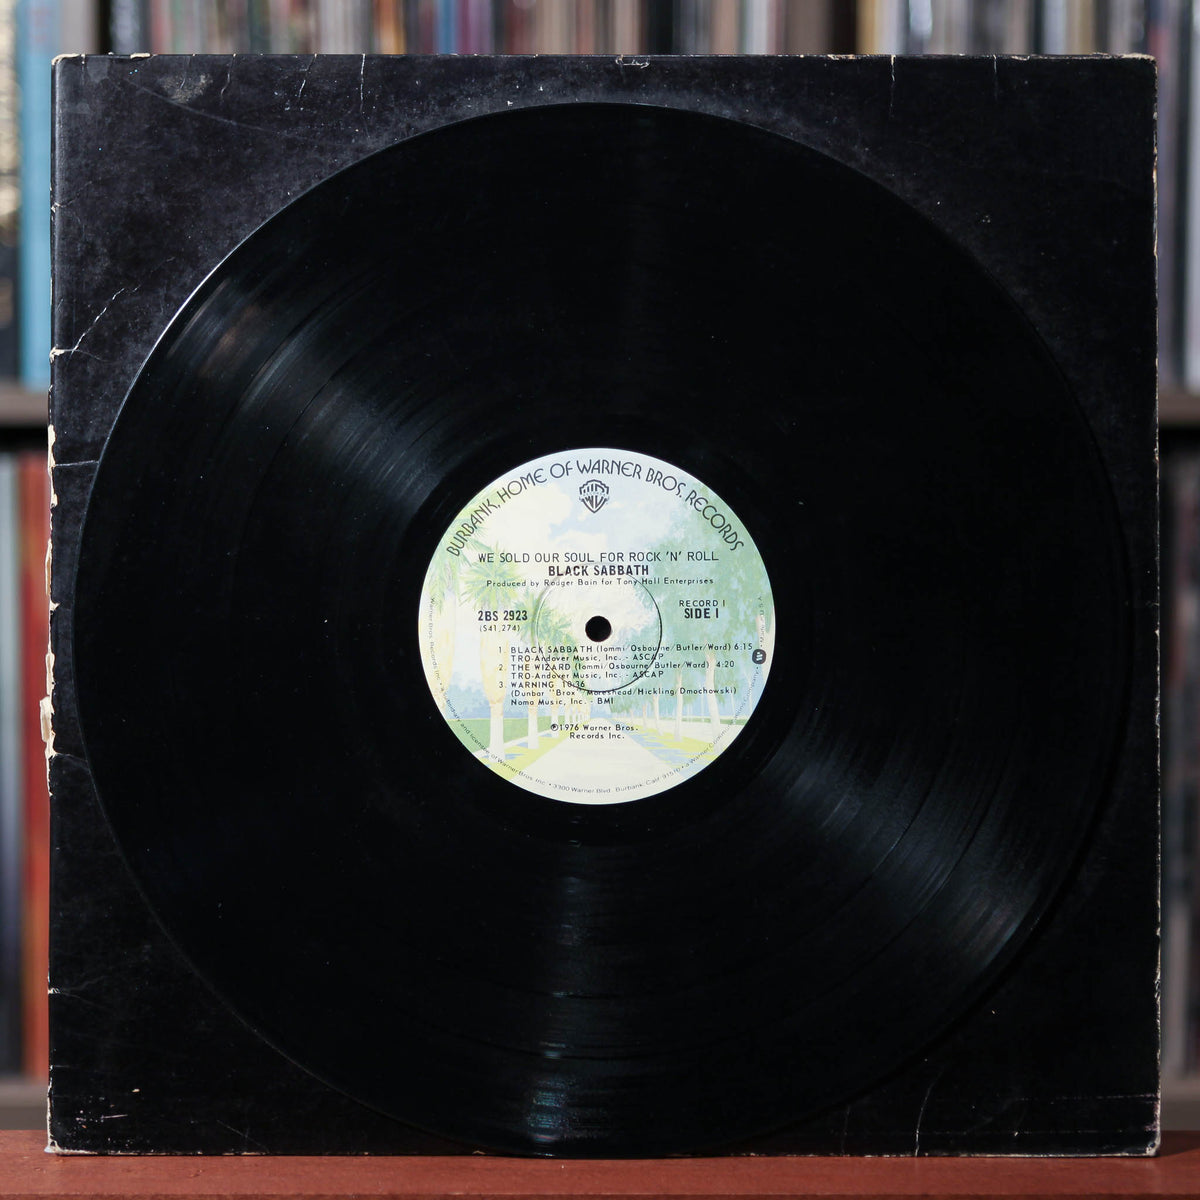 Black Sabbath - We Sold Our Soul For Rock 'N' Roll - 2LP - 1976